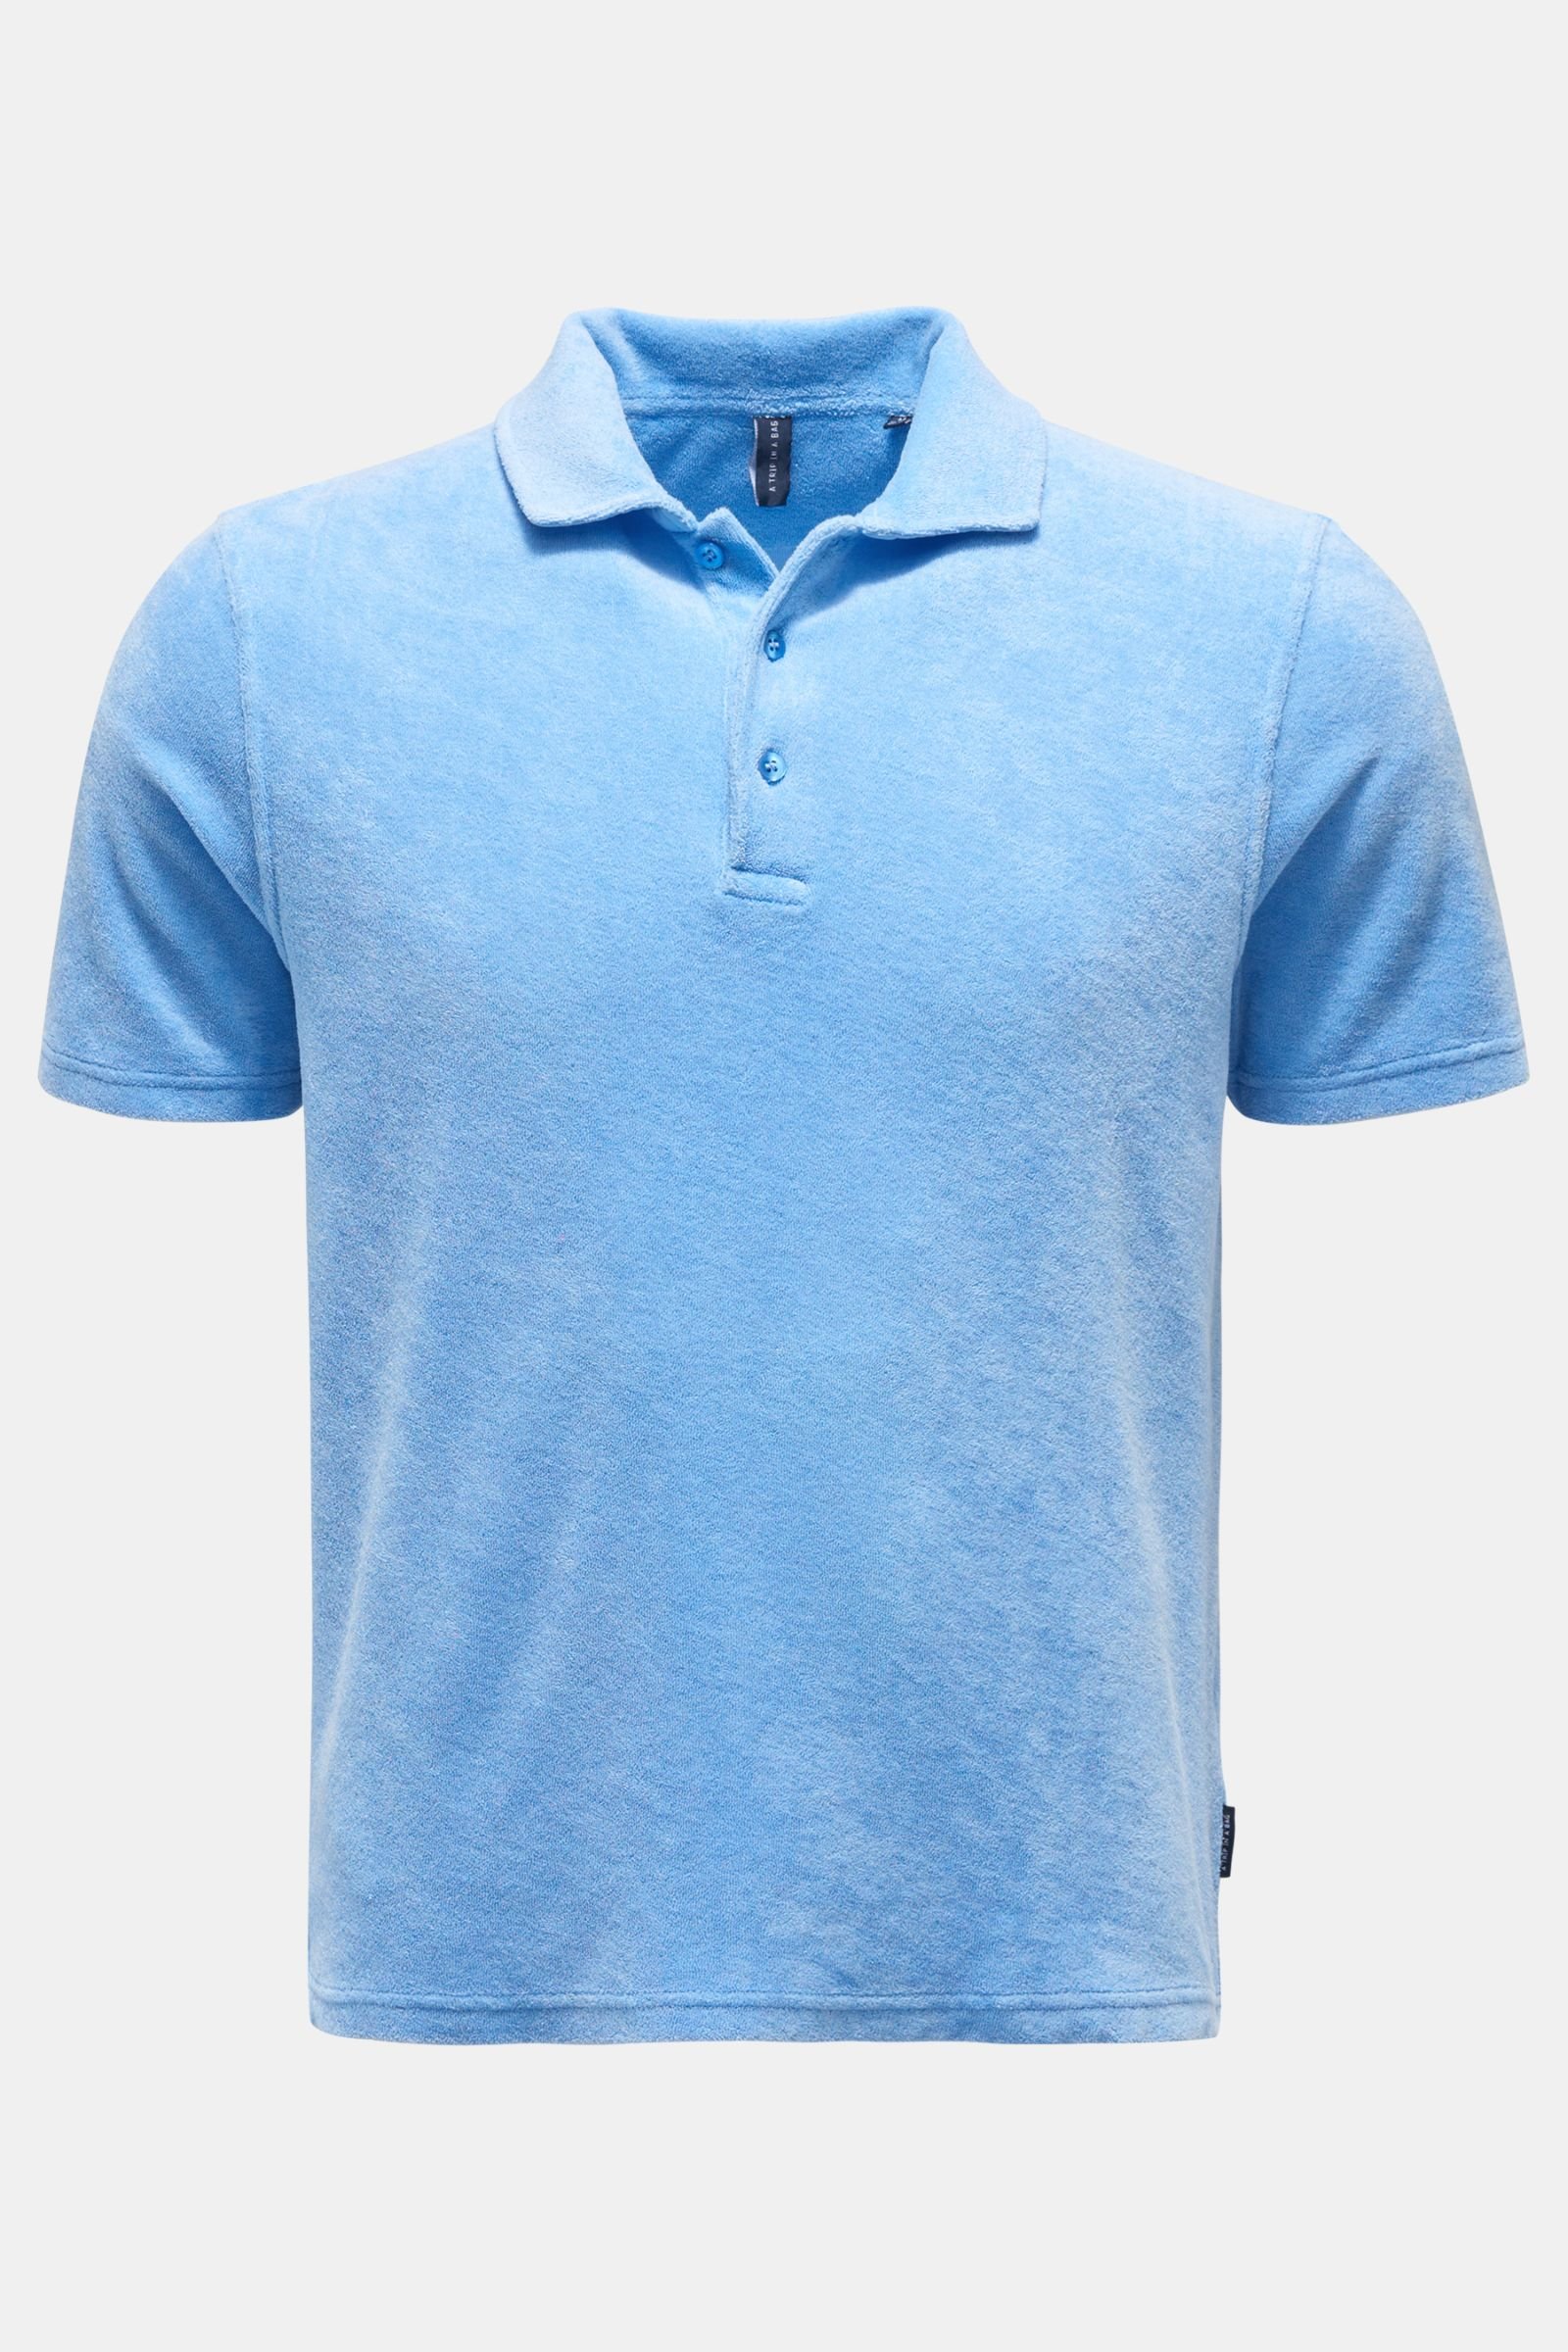 Terry polo shirt light blue